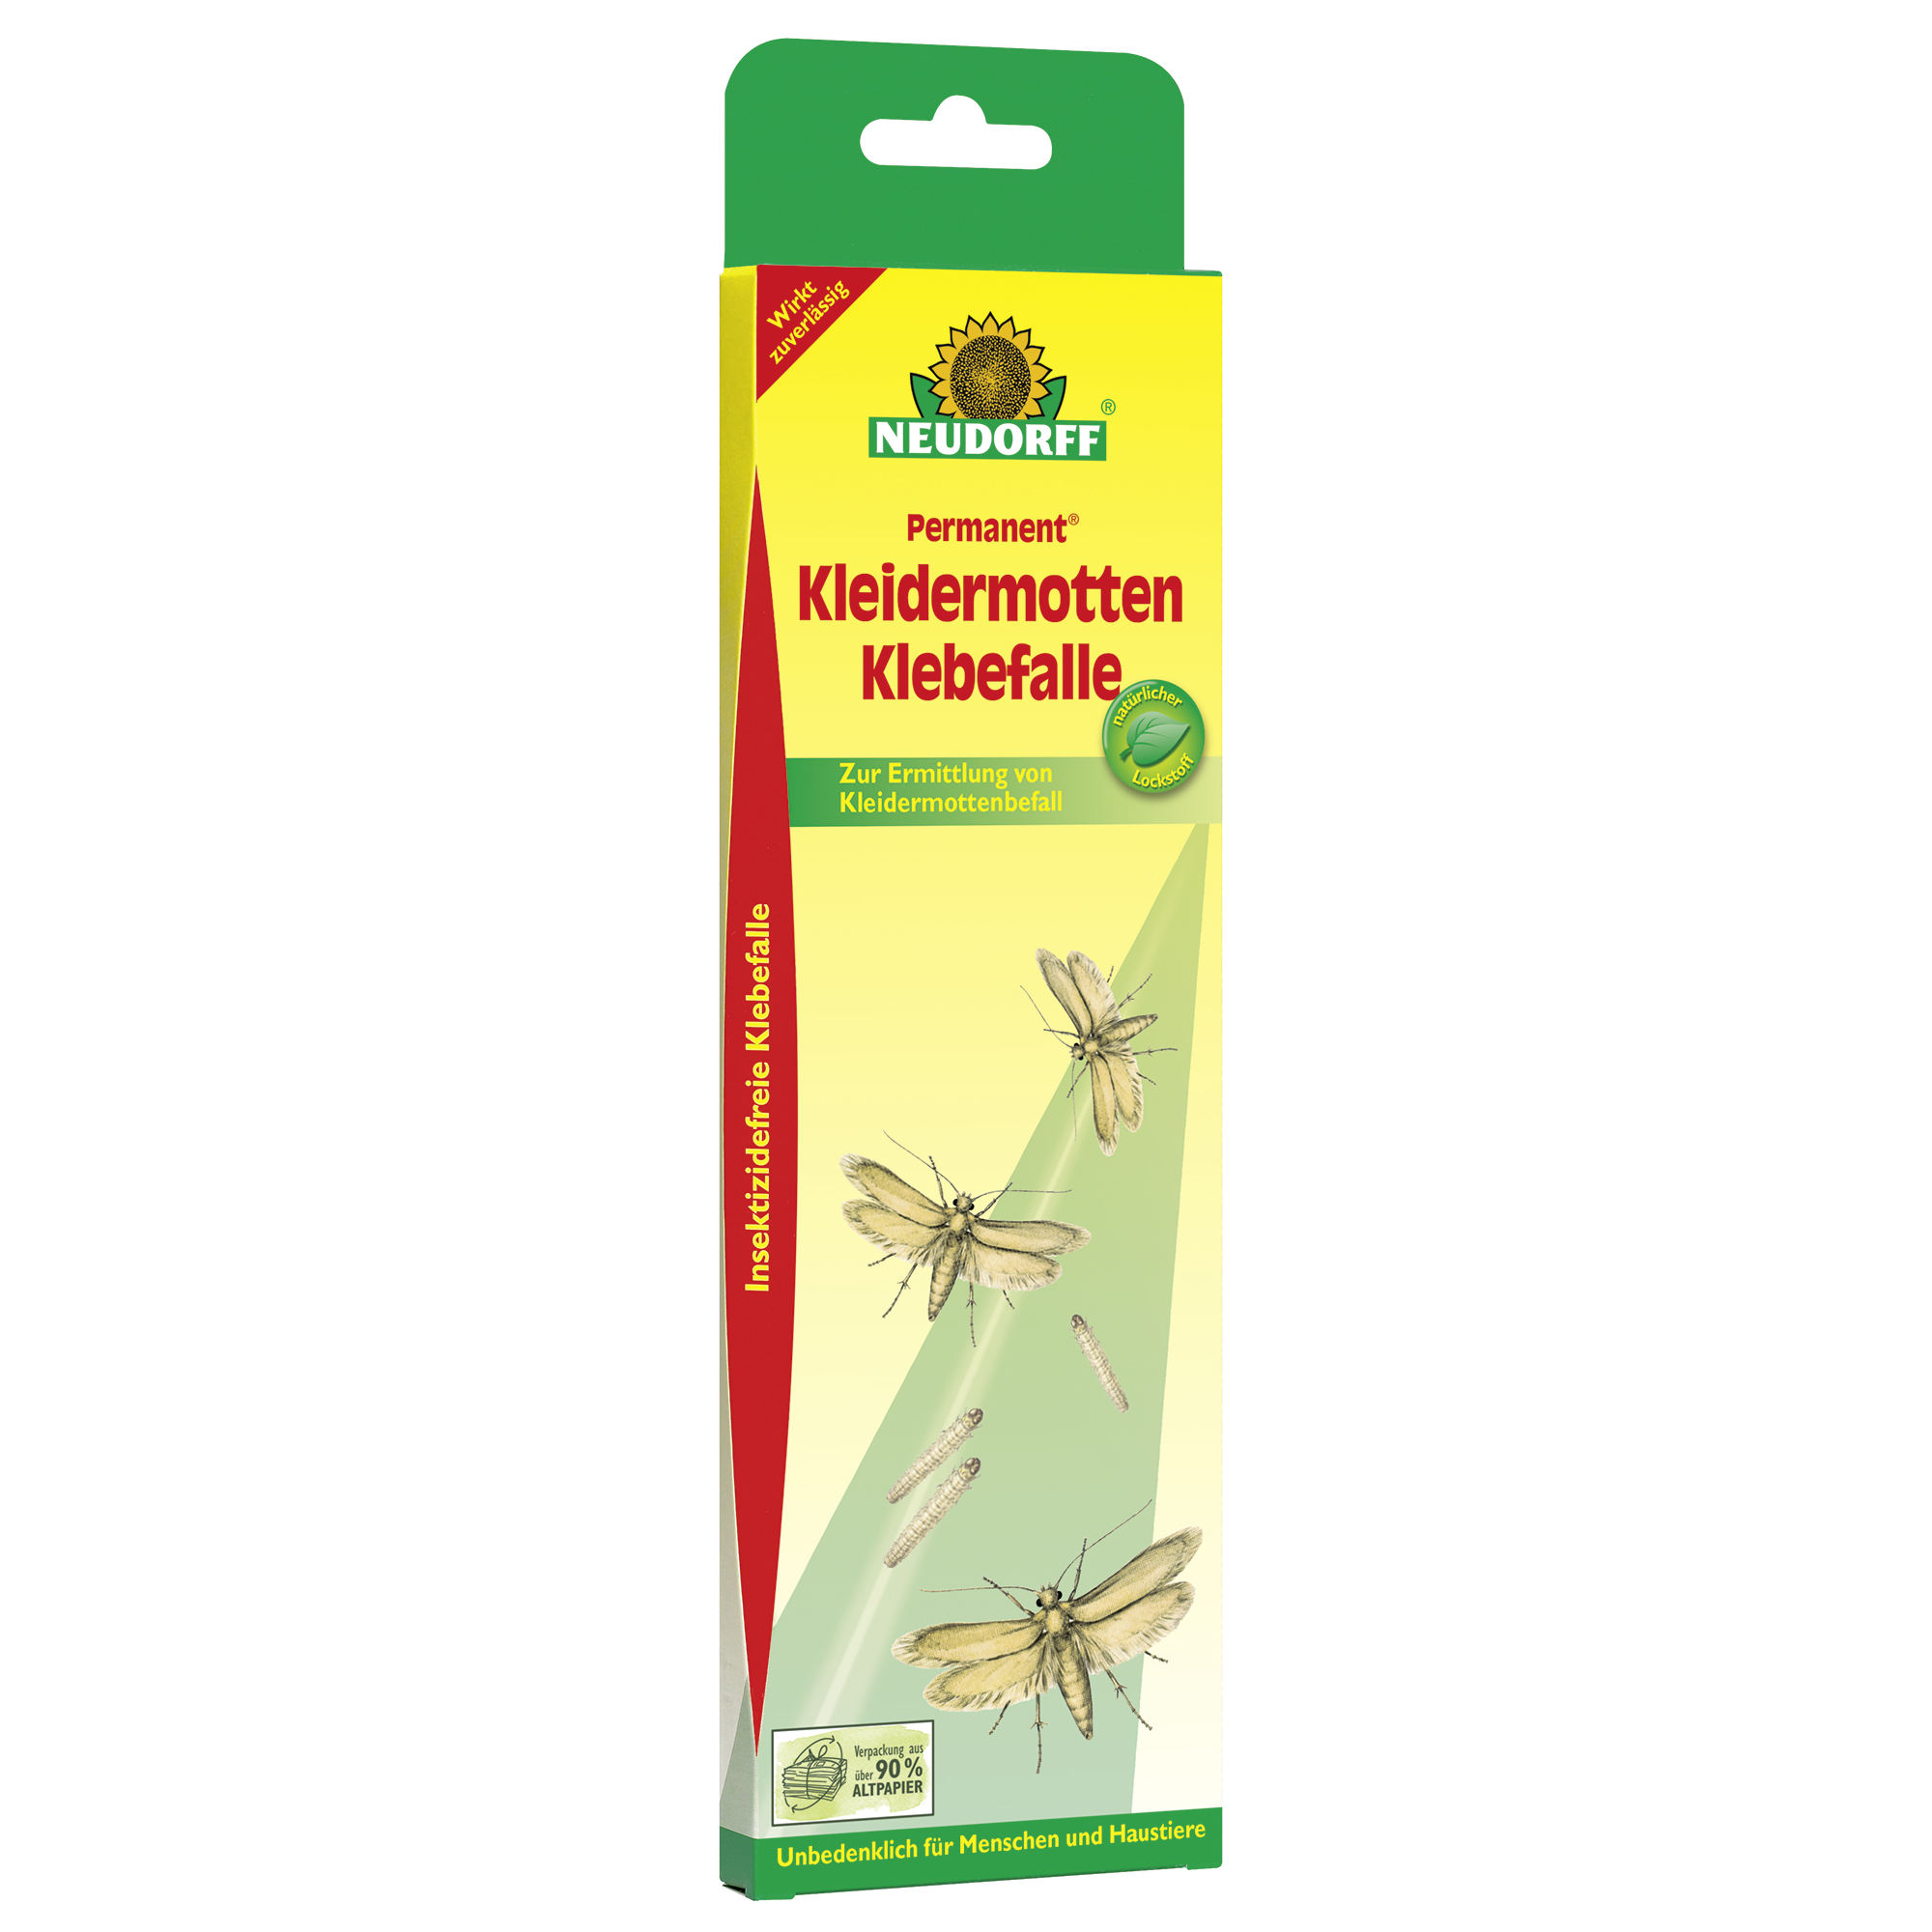 Permanent Kleidermotten-Klebefalle + product picture